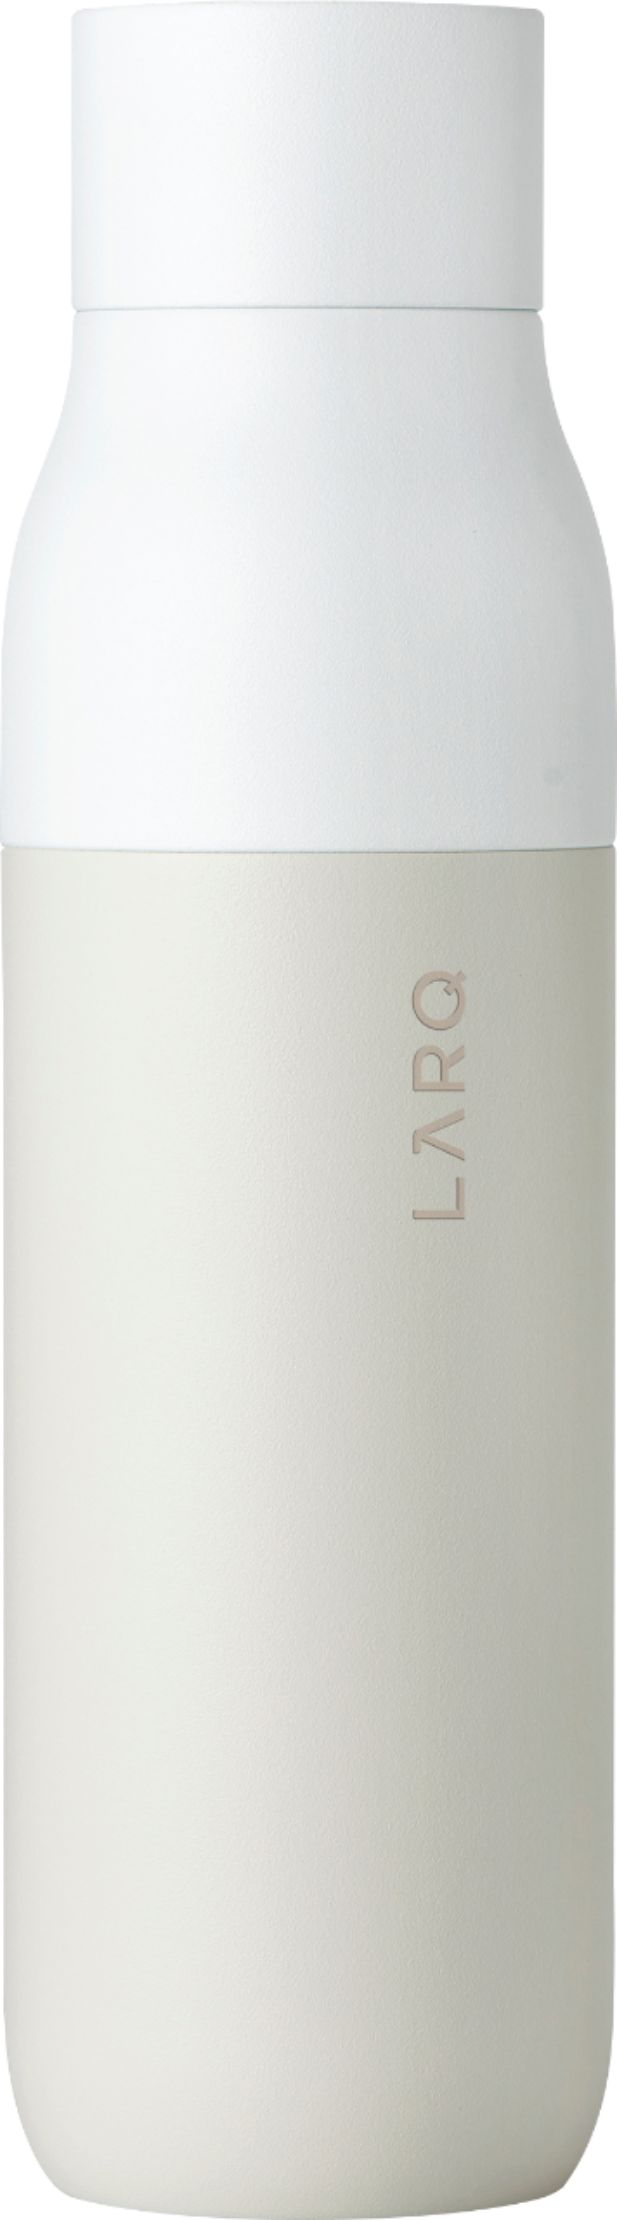 Angle View: LARQ - 17oz. Water Purification Thermal Bottle - Granite-White